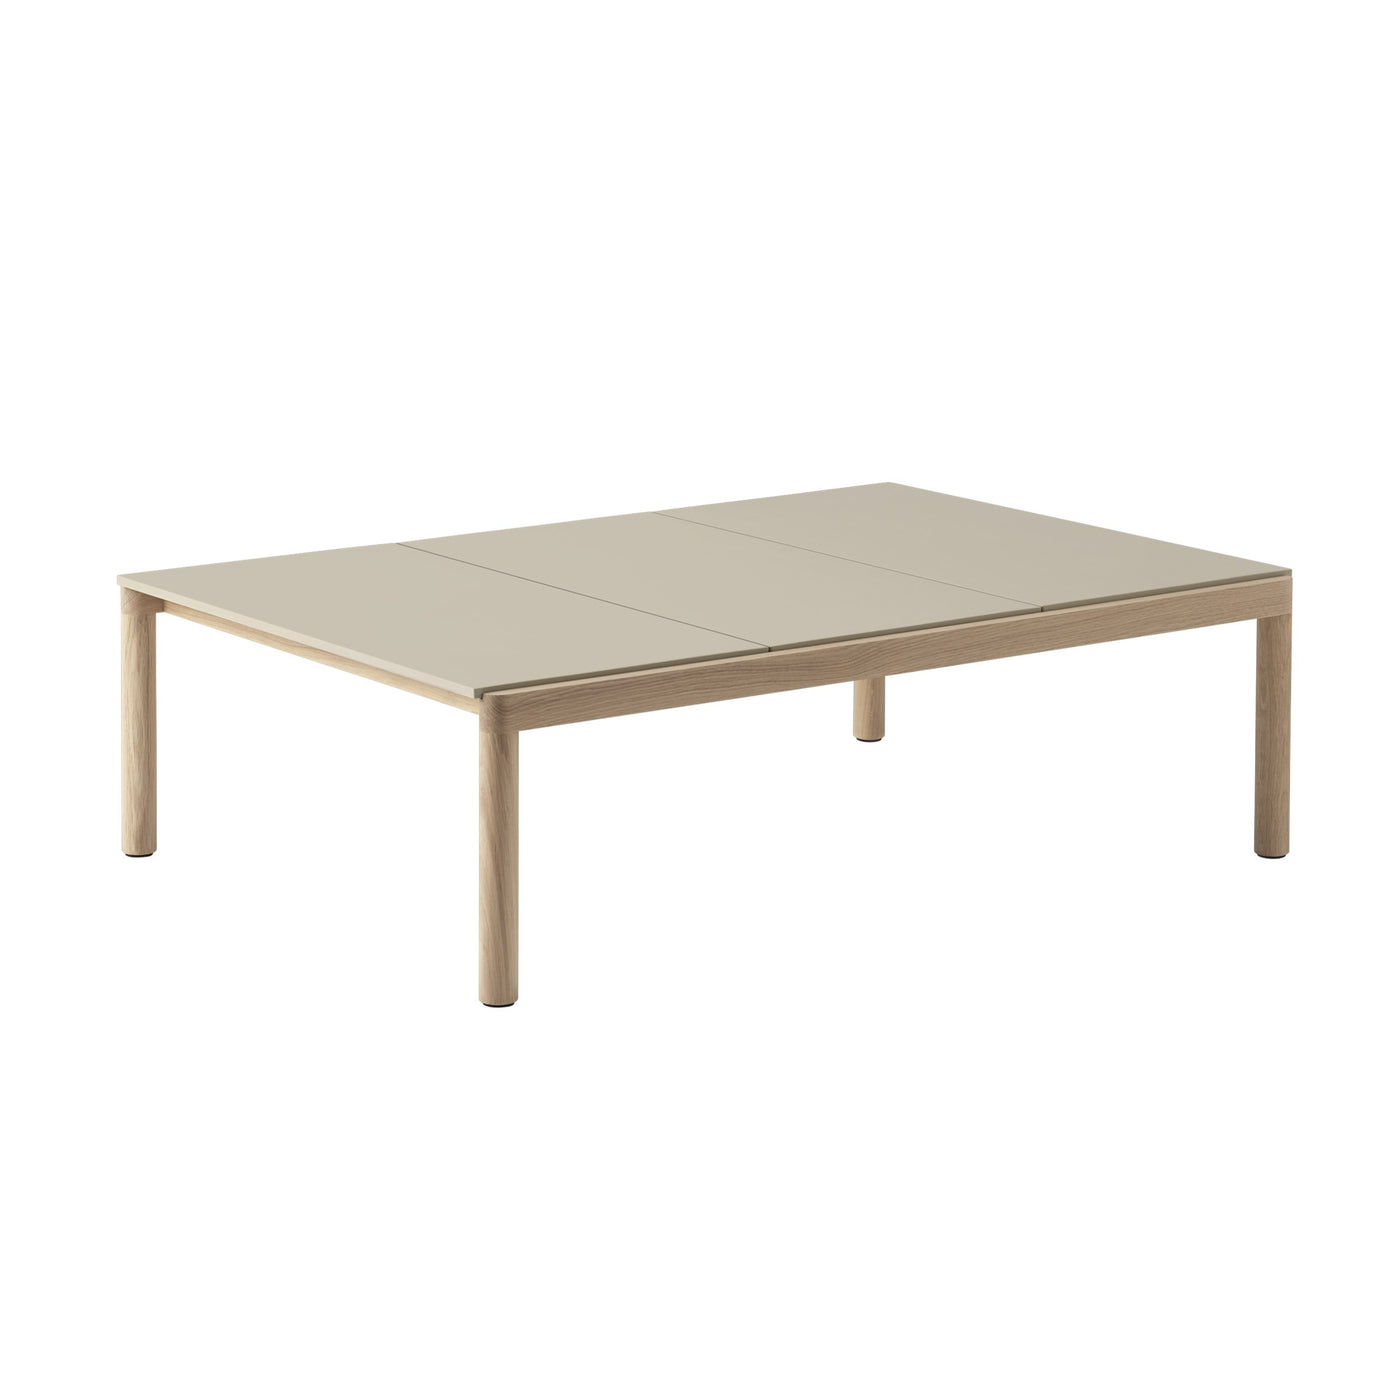 Muuto Couple Coffee Table 3 Plain Tiles, taupe with oak base. #style_3-plain